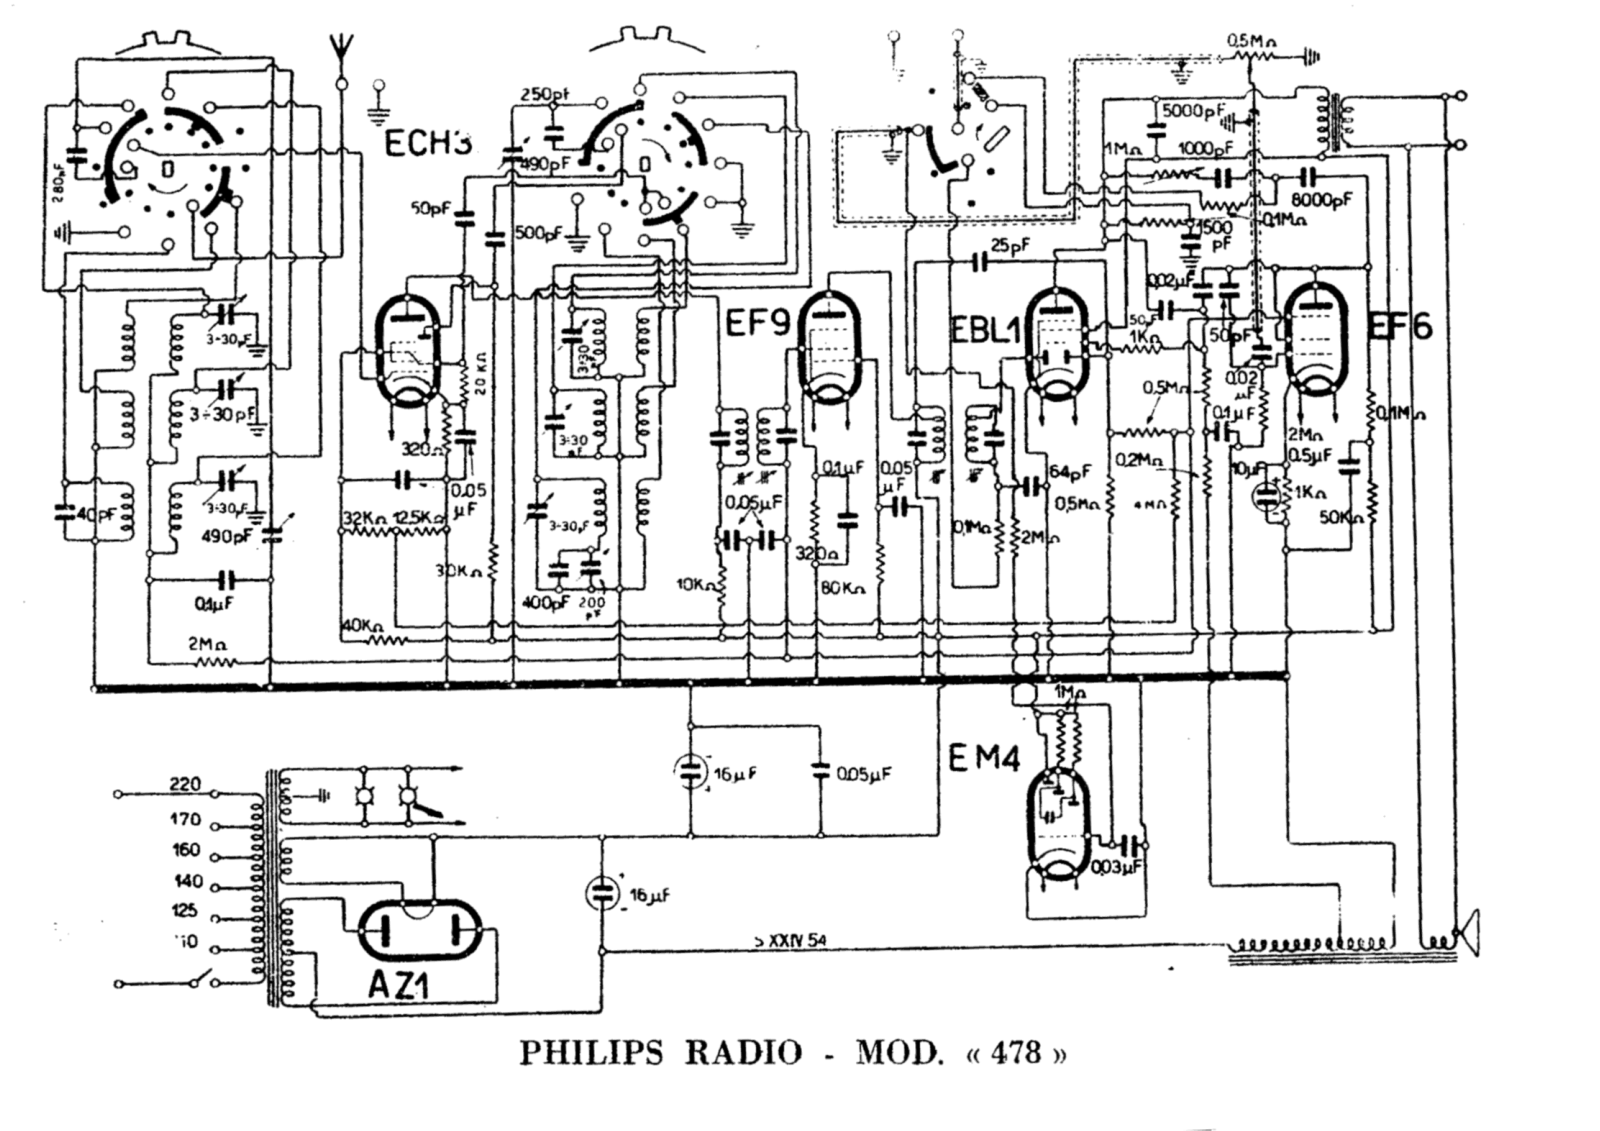 Philips 478 i schematic